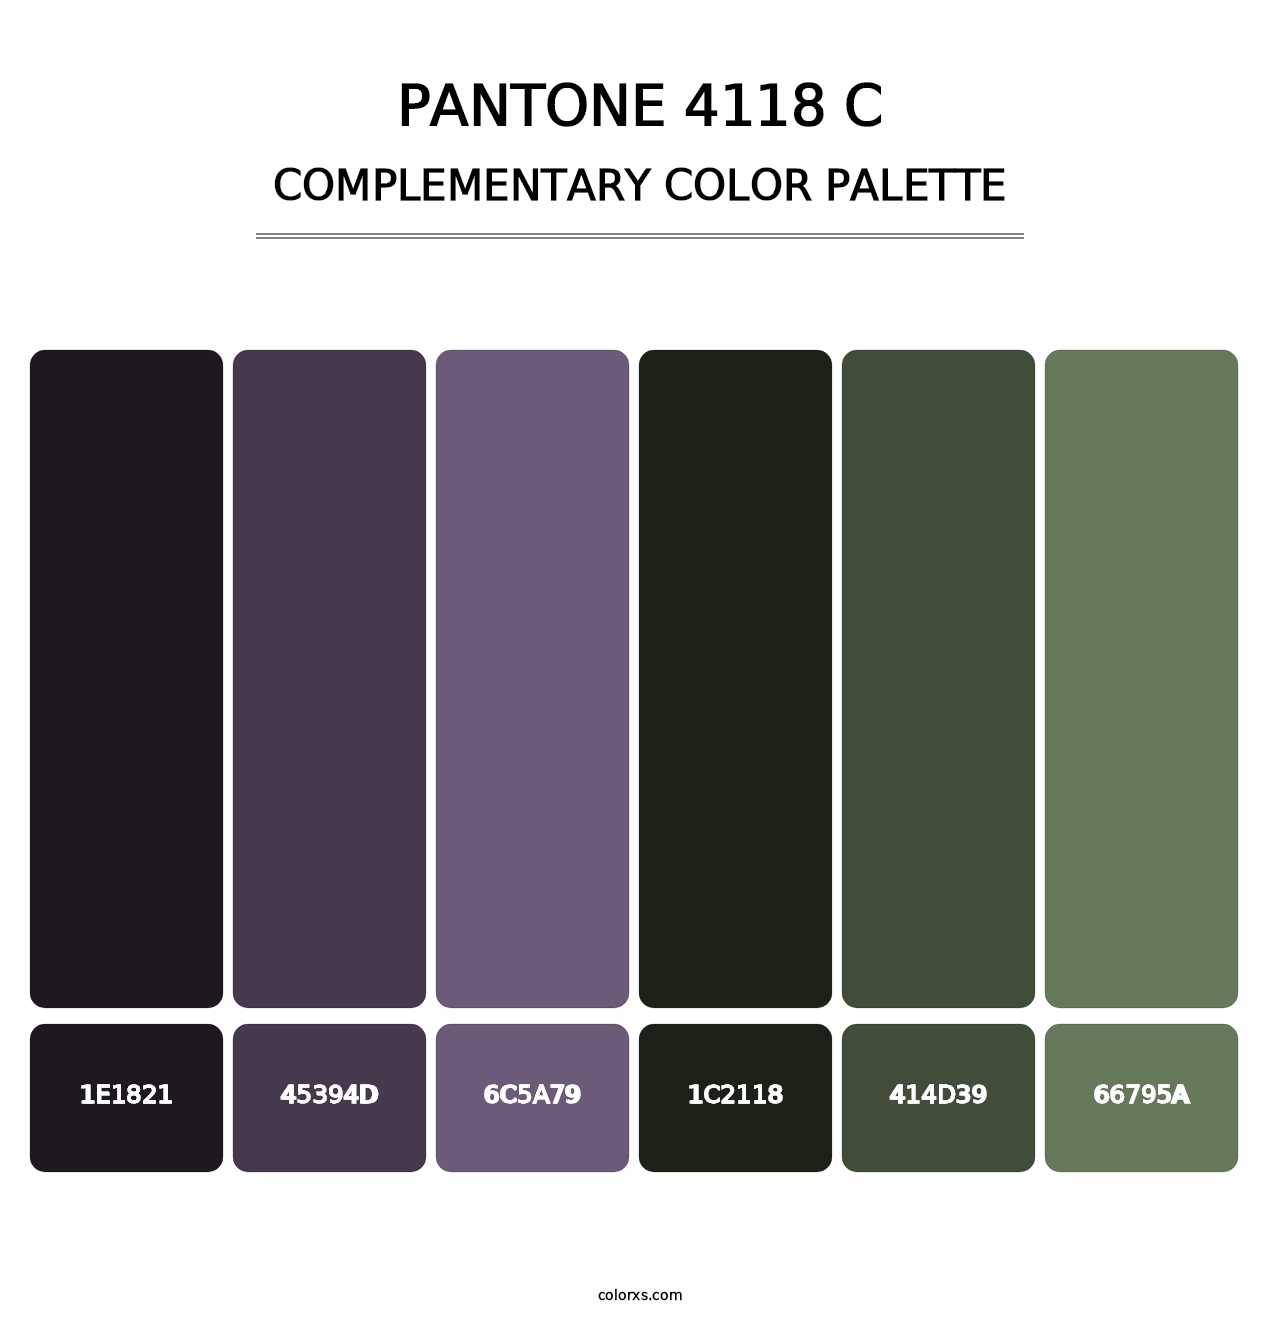 PANTONE 4118 C - Complementary Color Palette